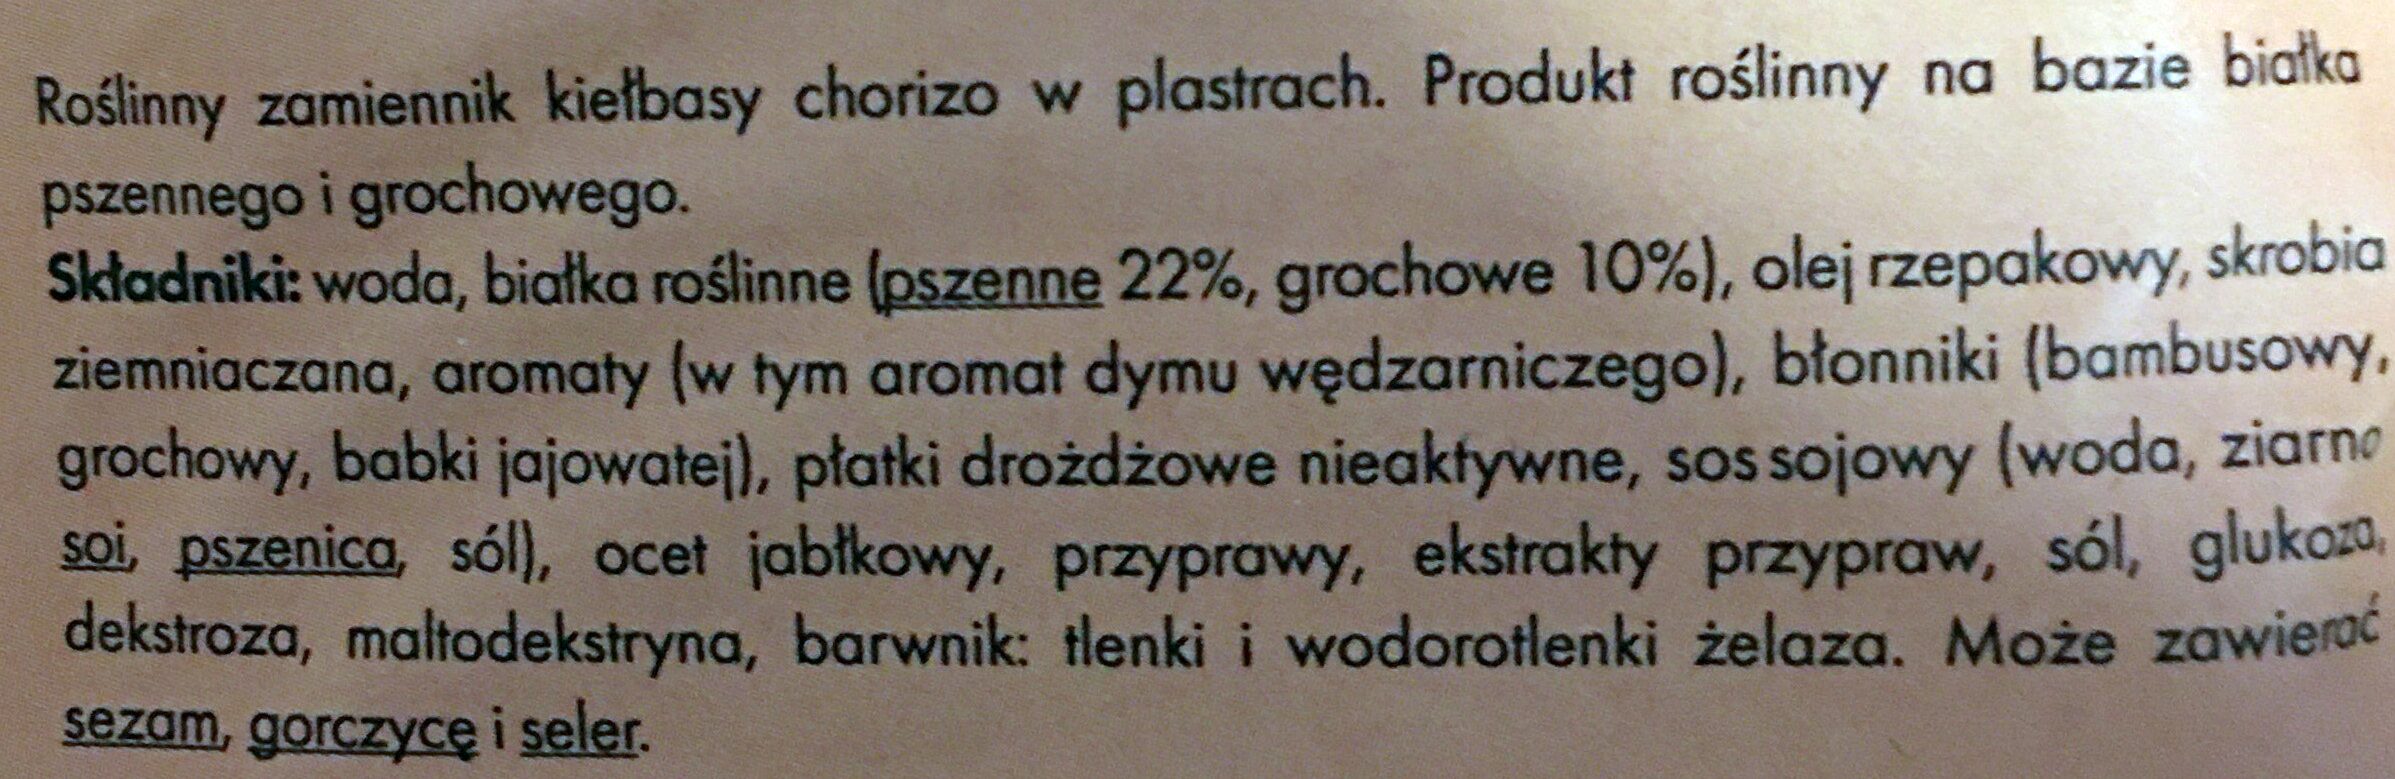 Meatless chorizo - Składniki